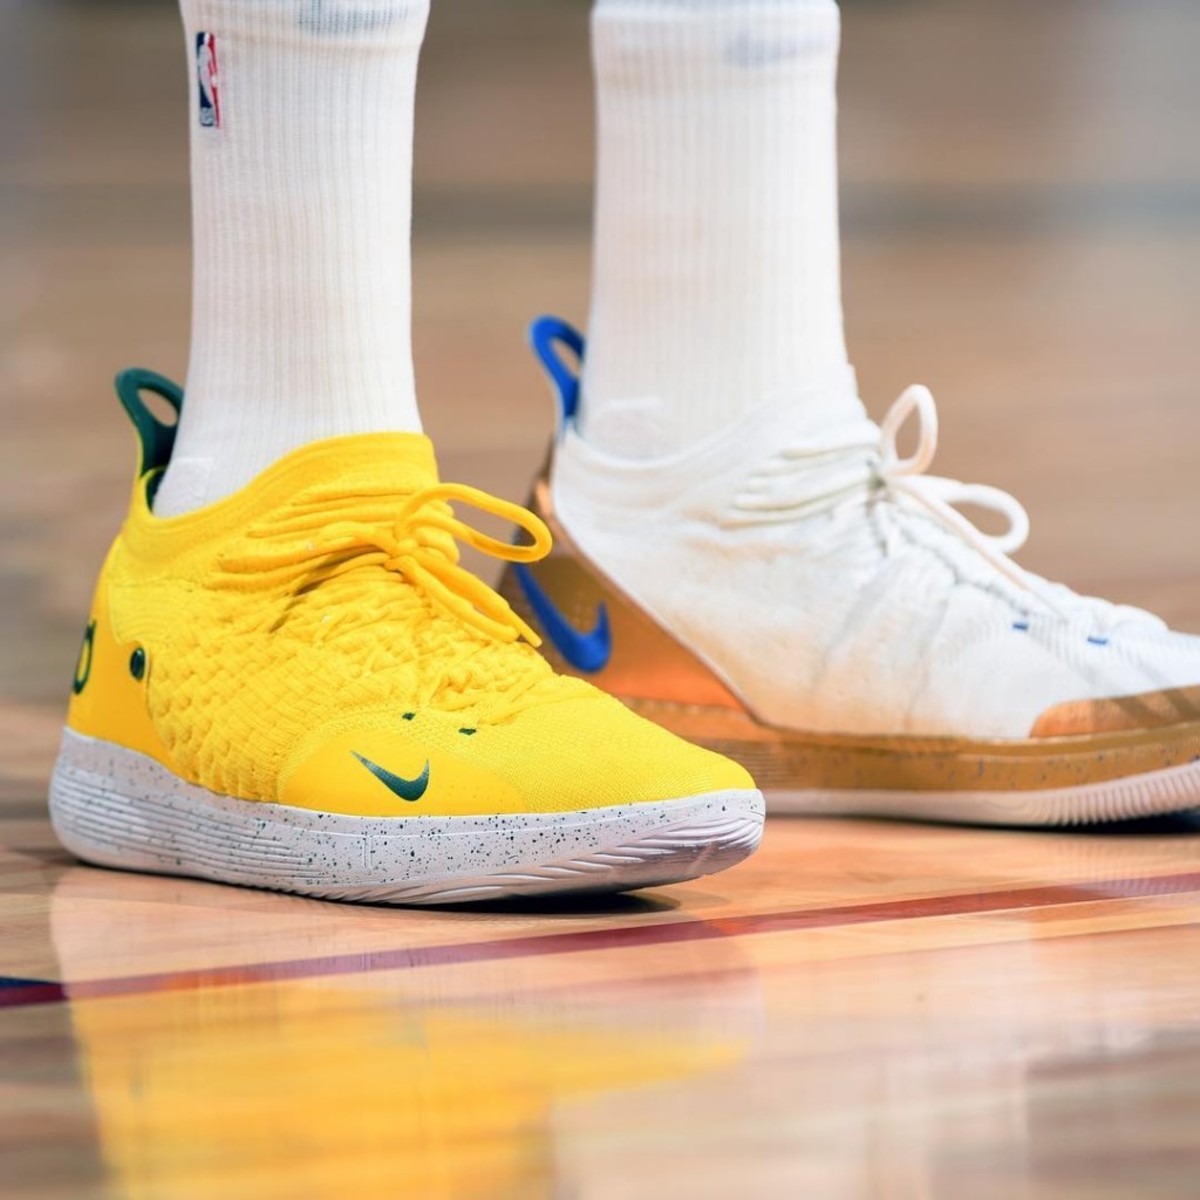 Top 10 Best Looking Basketball Shoes This Season – NBA News Rumors Trades Stats Free ...